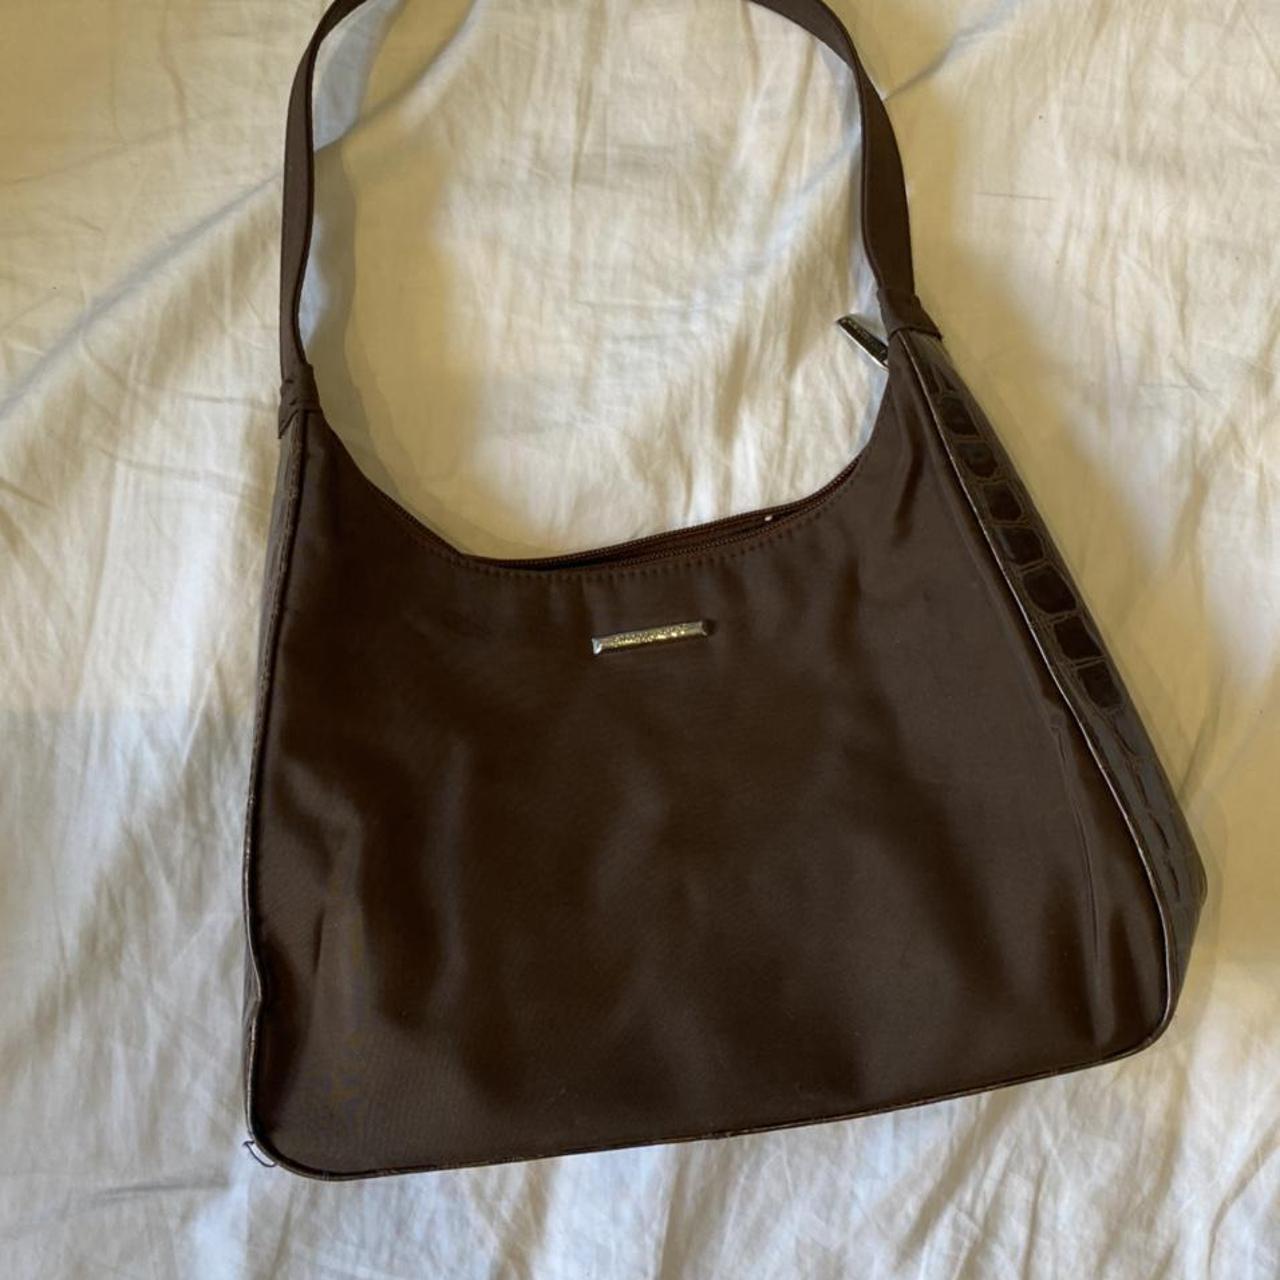 Amazon.com: ROUROU Tassel Shoulder Bag for Women Top Handle Handbag Large  Capacity Crossbody Bag Adjustable Shoulder Strap Satchel : Clothing, Shoes  & Jewelry